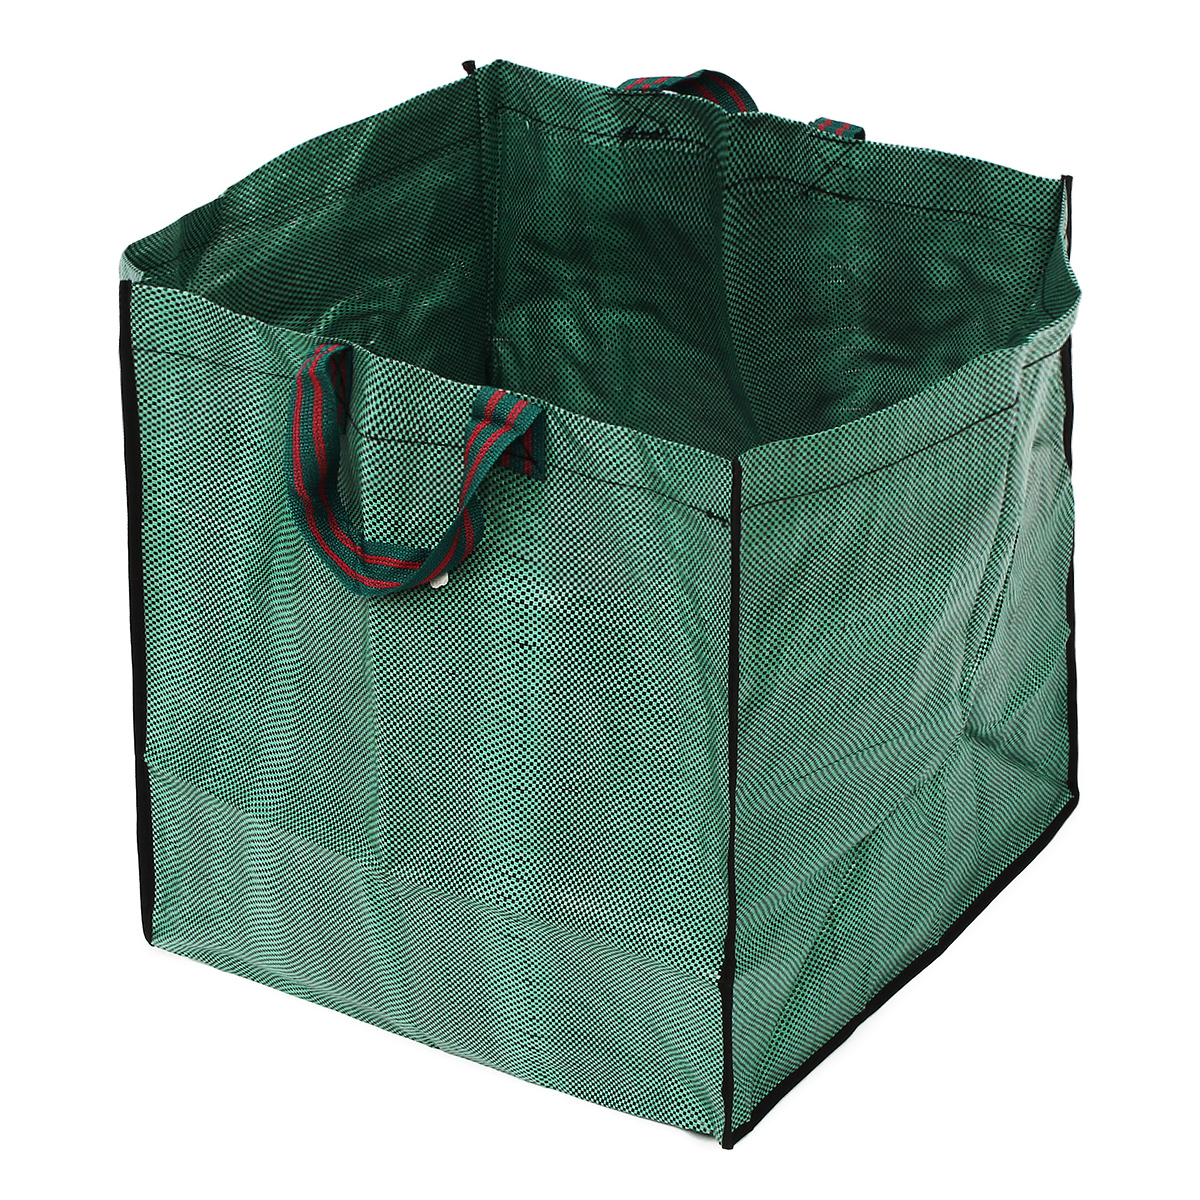 Reusable Waterproof Portable Duty Garden Waste Bag Refuse Sack Leaves Grass Bin от Banggood WW